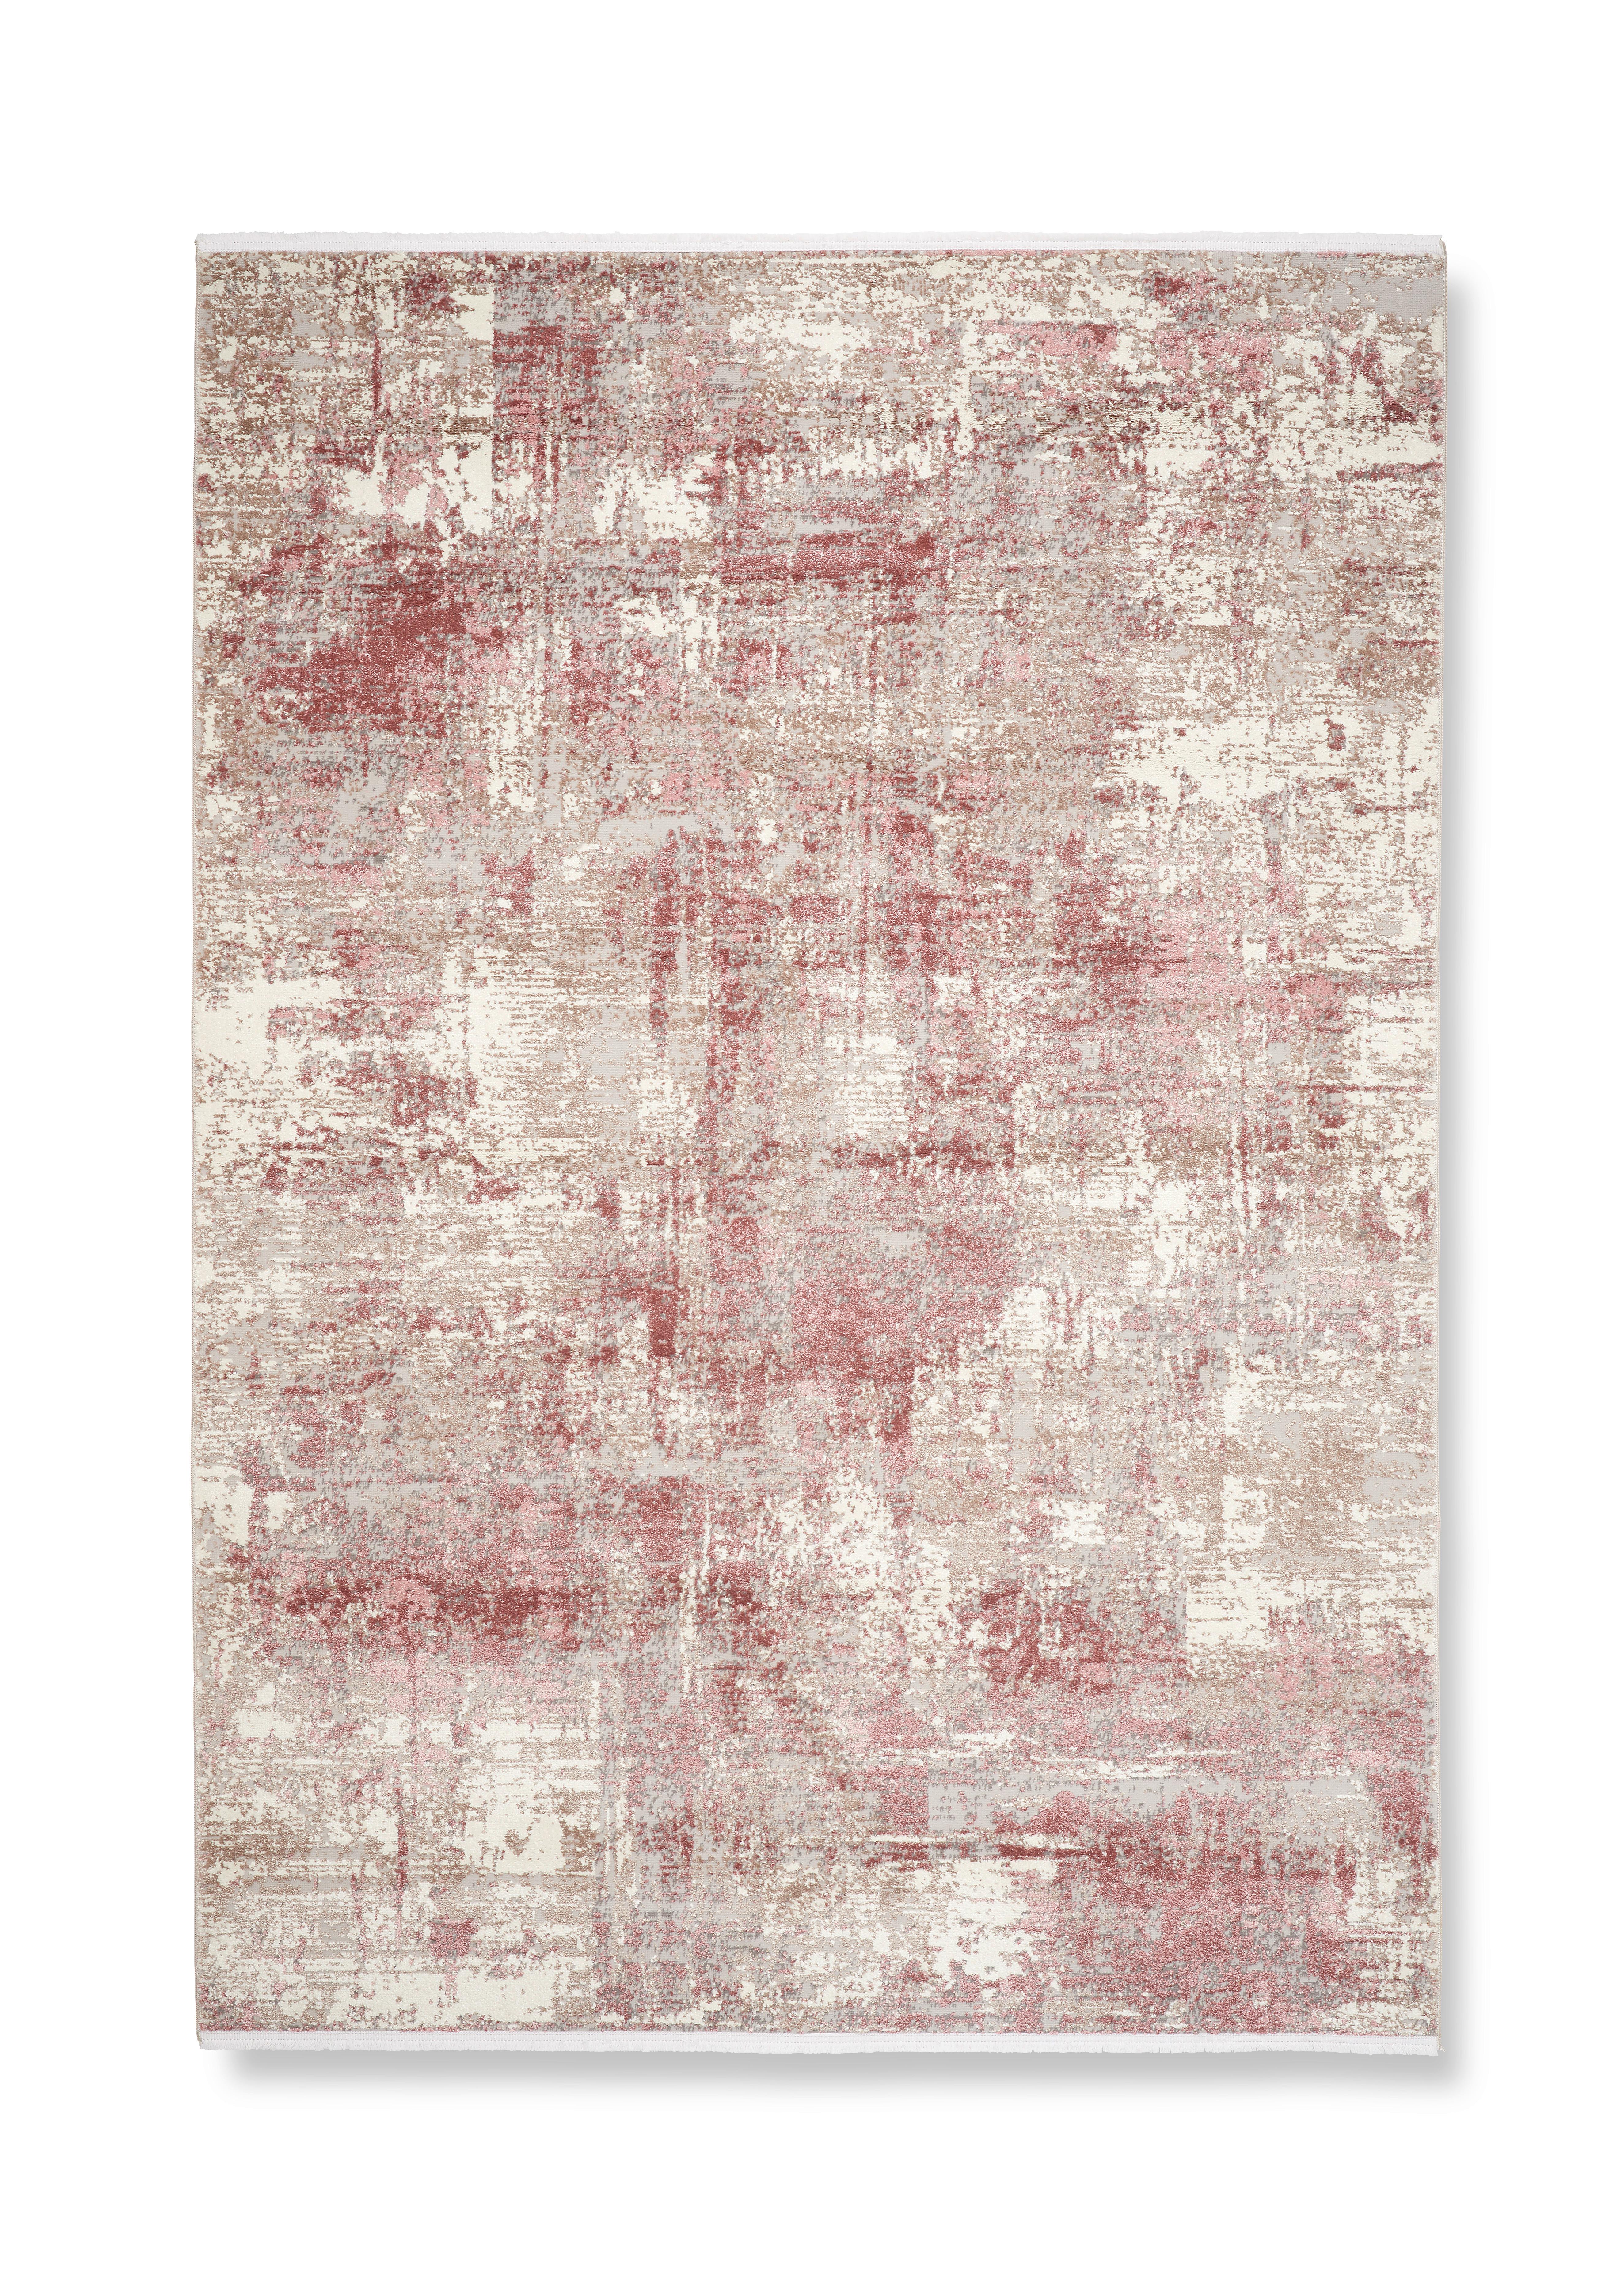 Tkaný Koberec Malik 1, 80/150 Cm - pink/krémová, Moderný, textil (80/150cm) - Modern Living